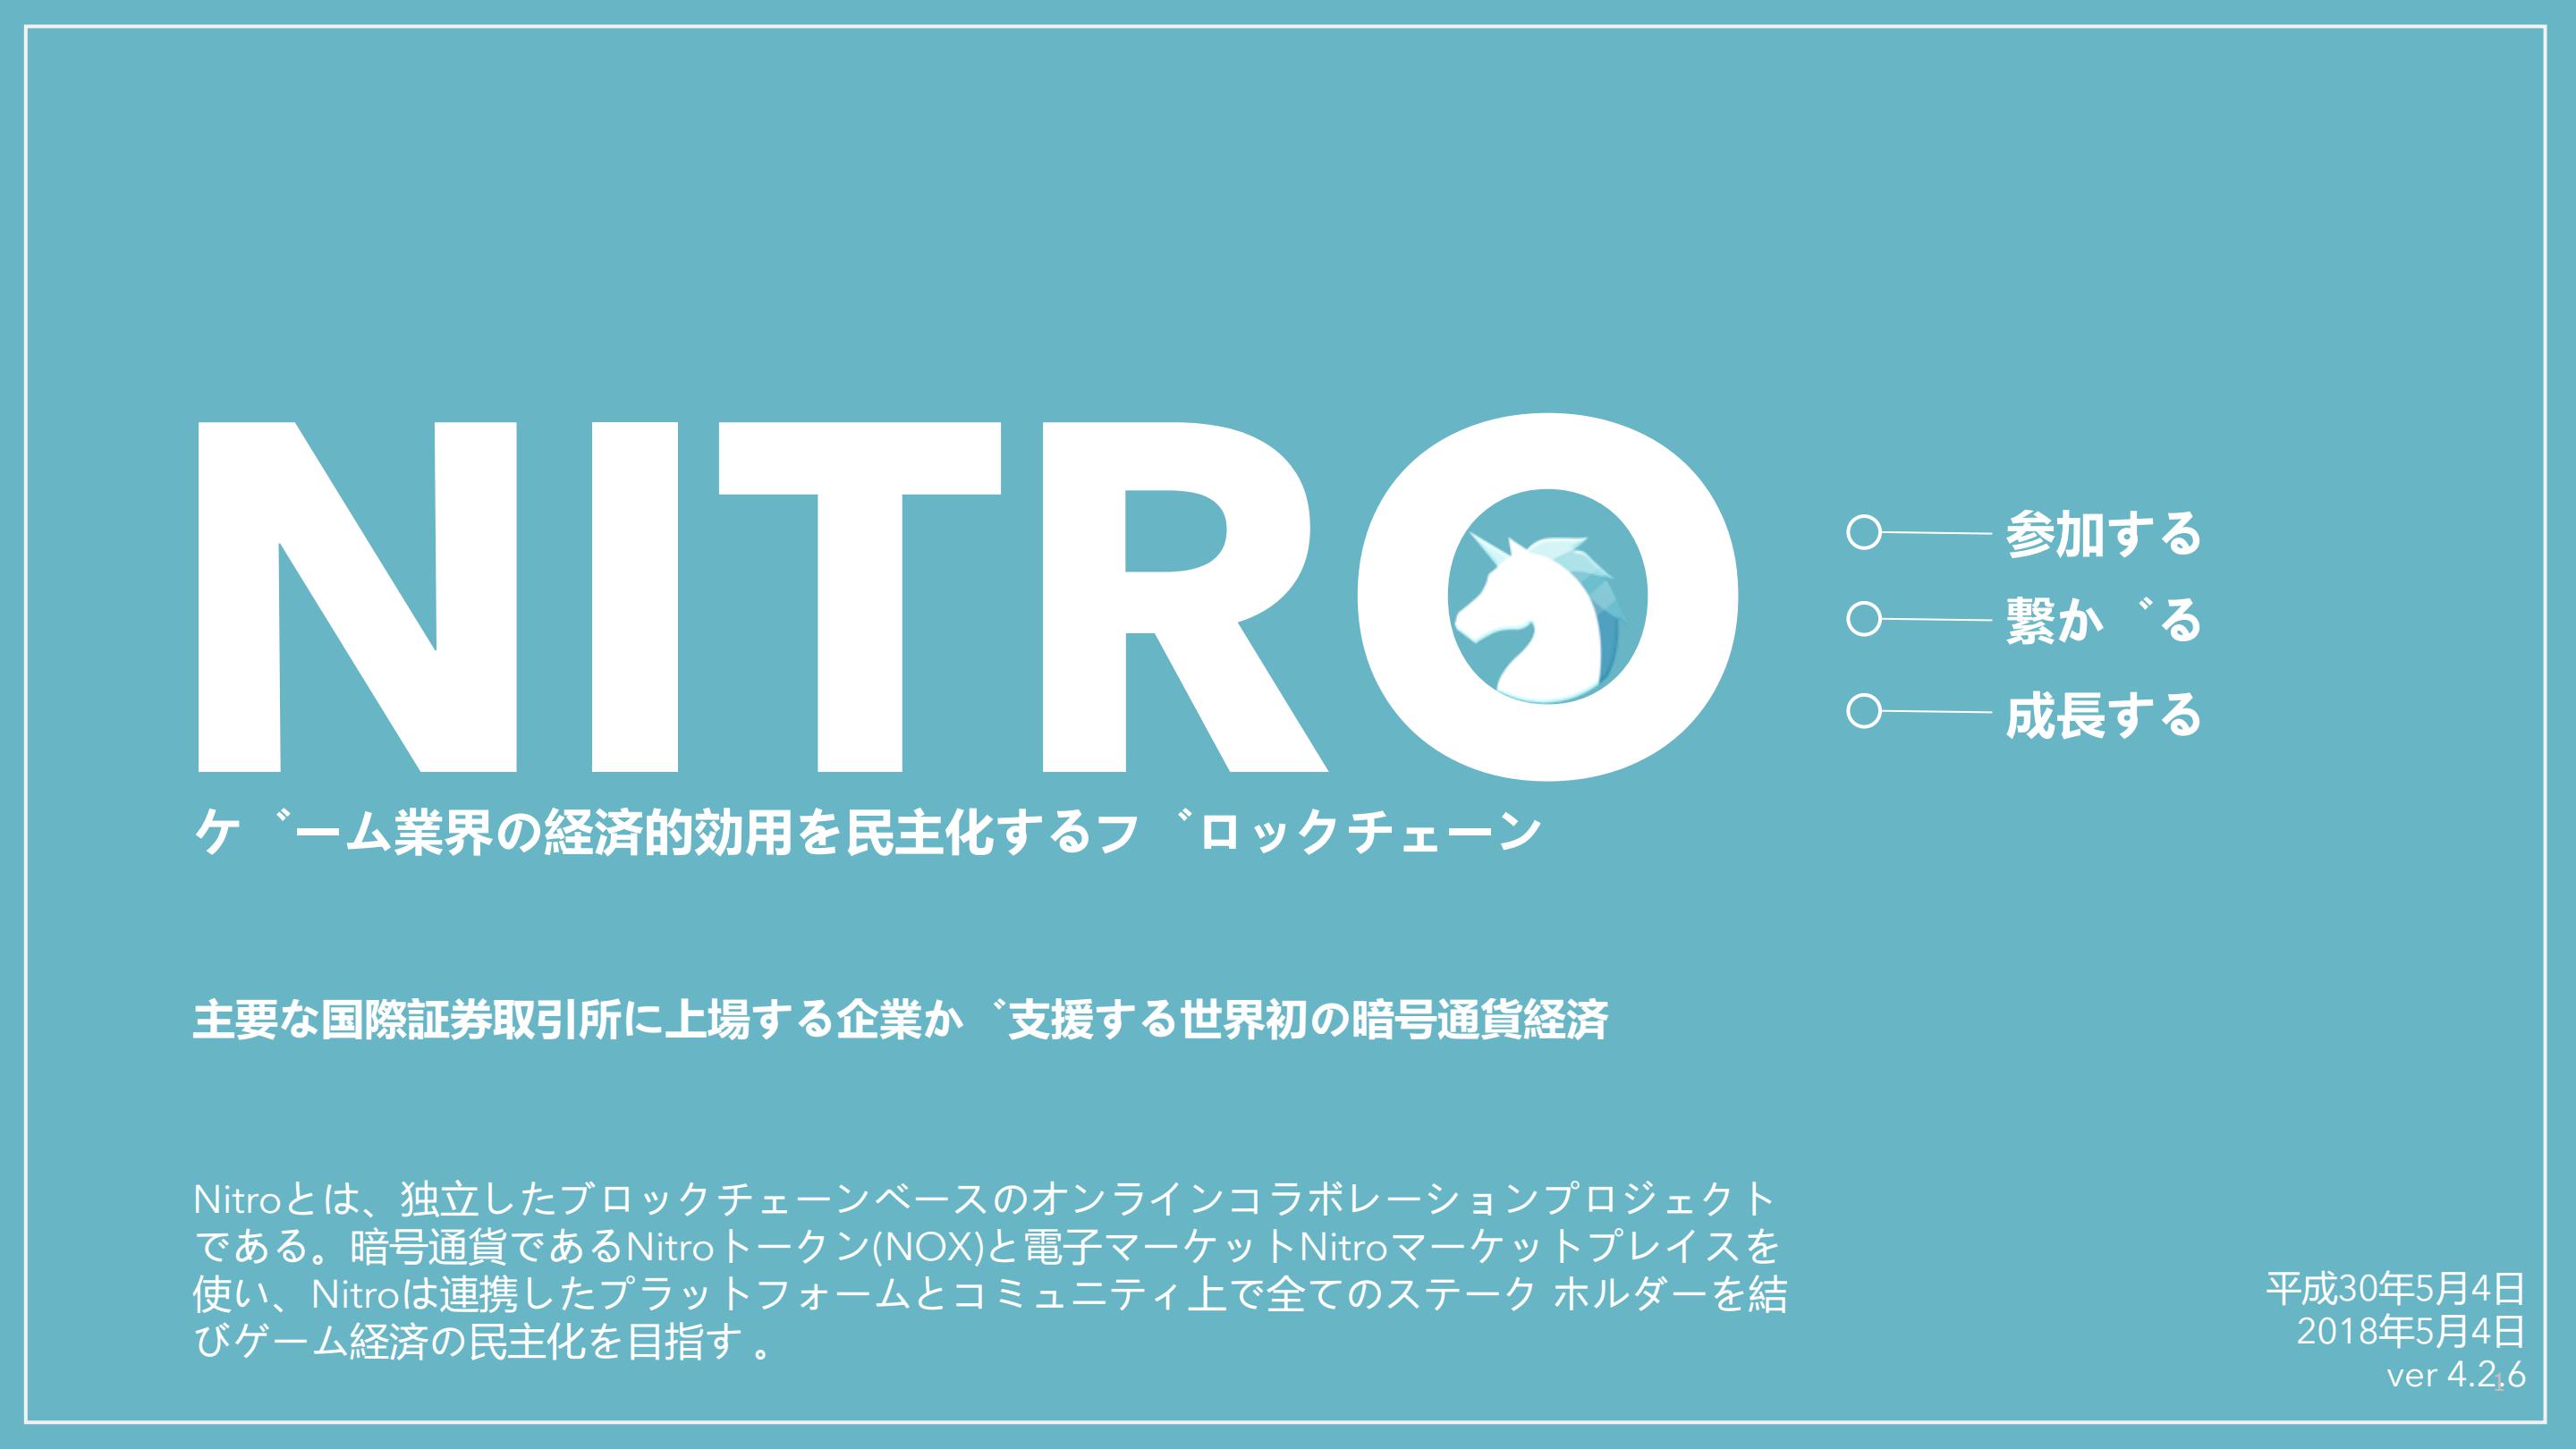 NOX_Nitro Deck (Abridged Whitepaper)_v4.2.6 JP_00.jpg